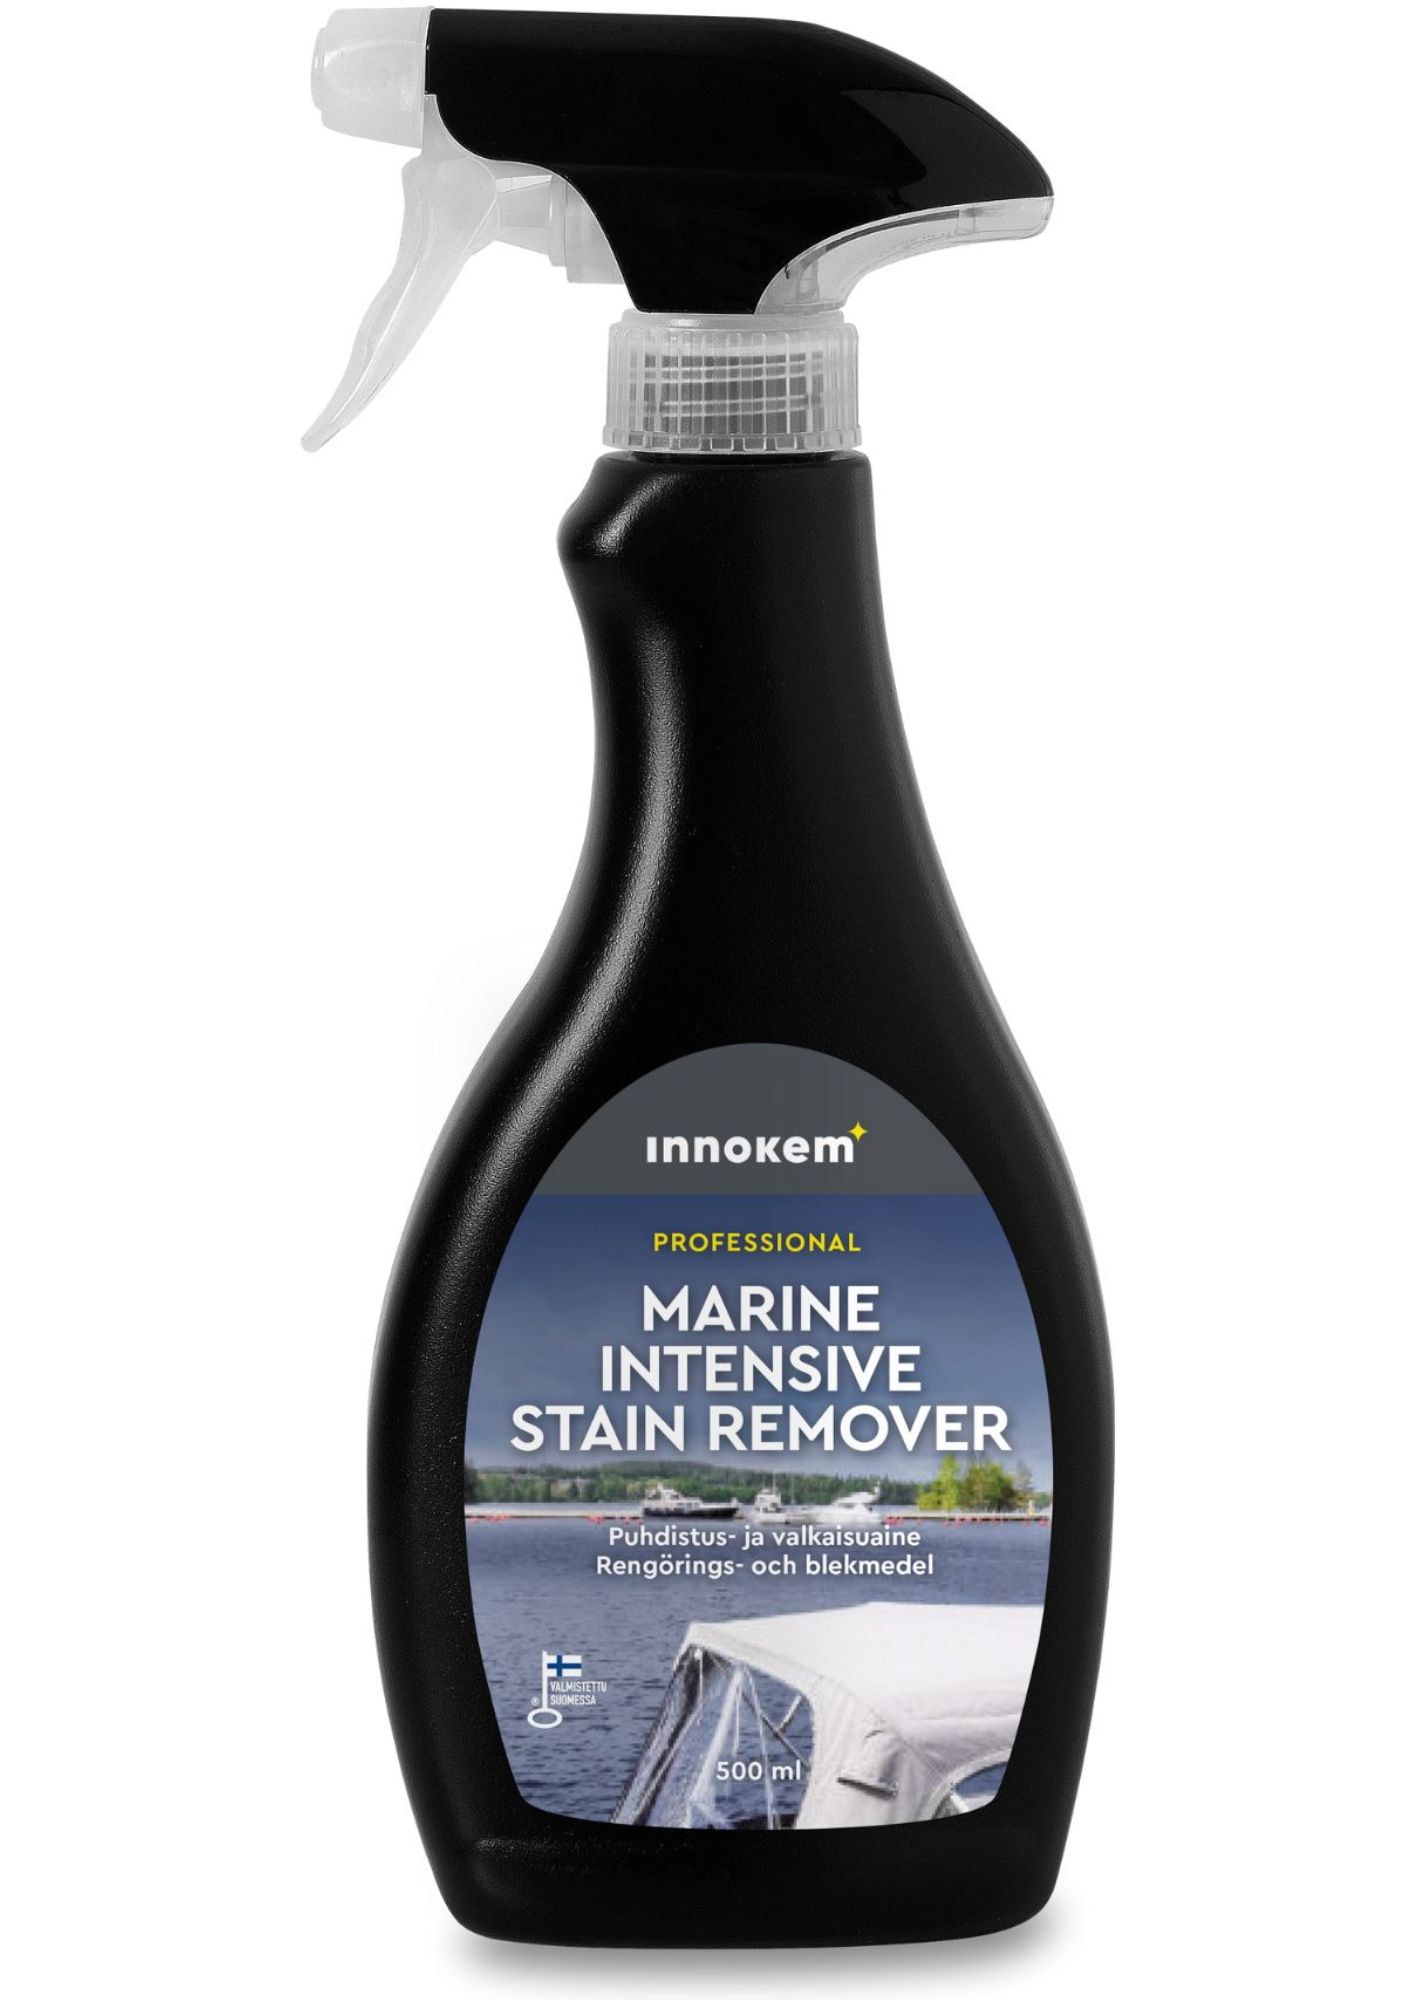 innokem marine intensive stain remover